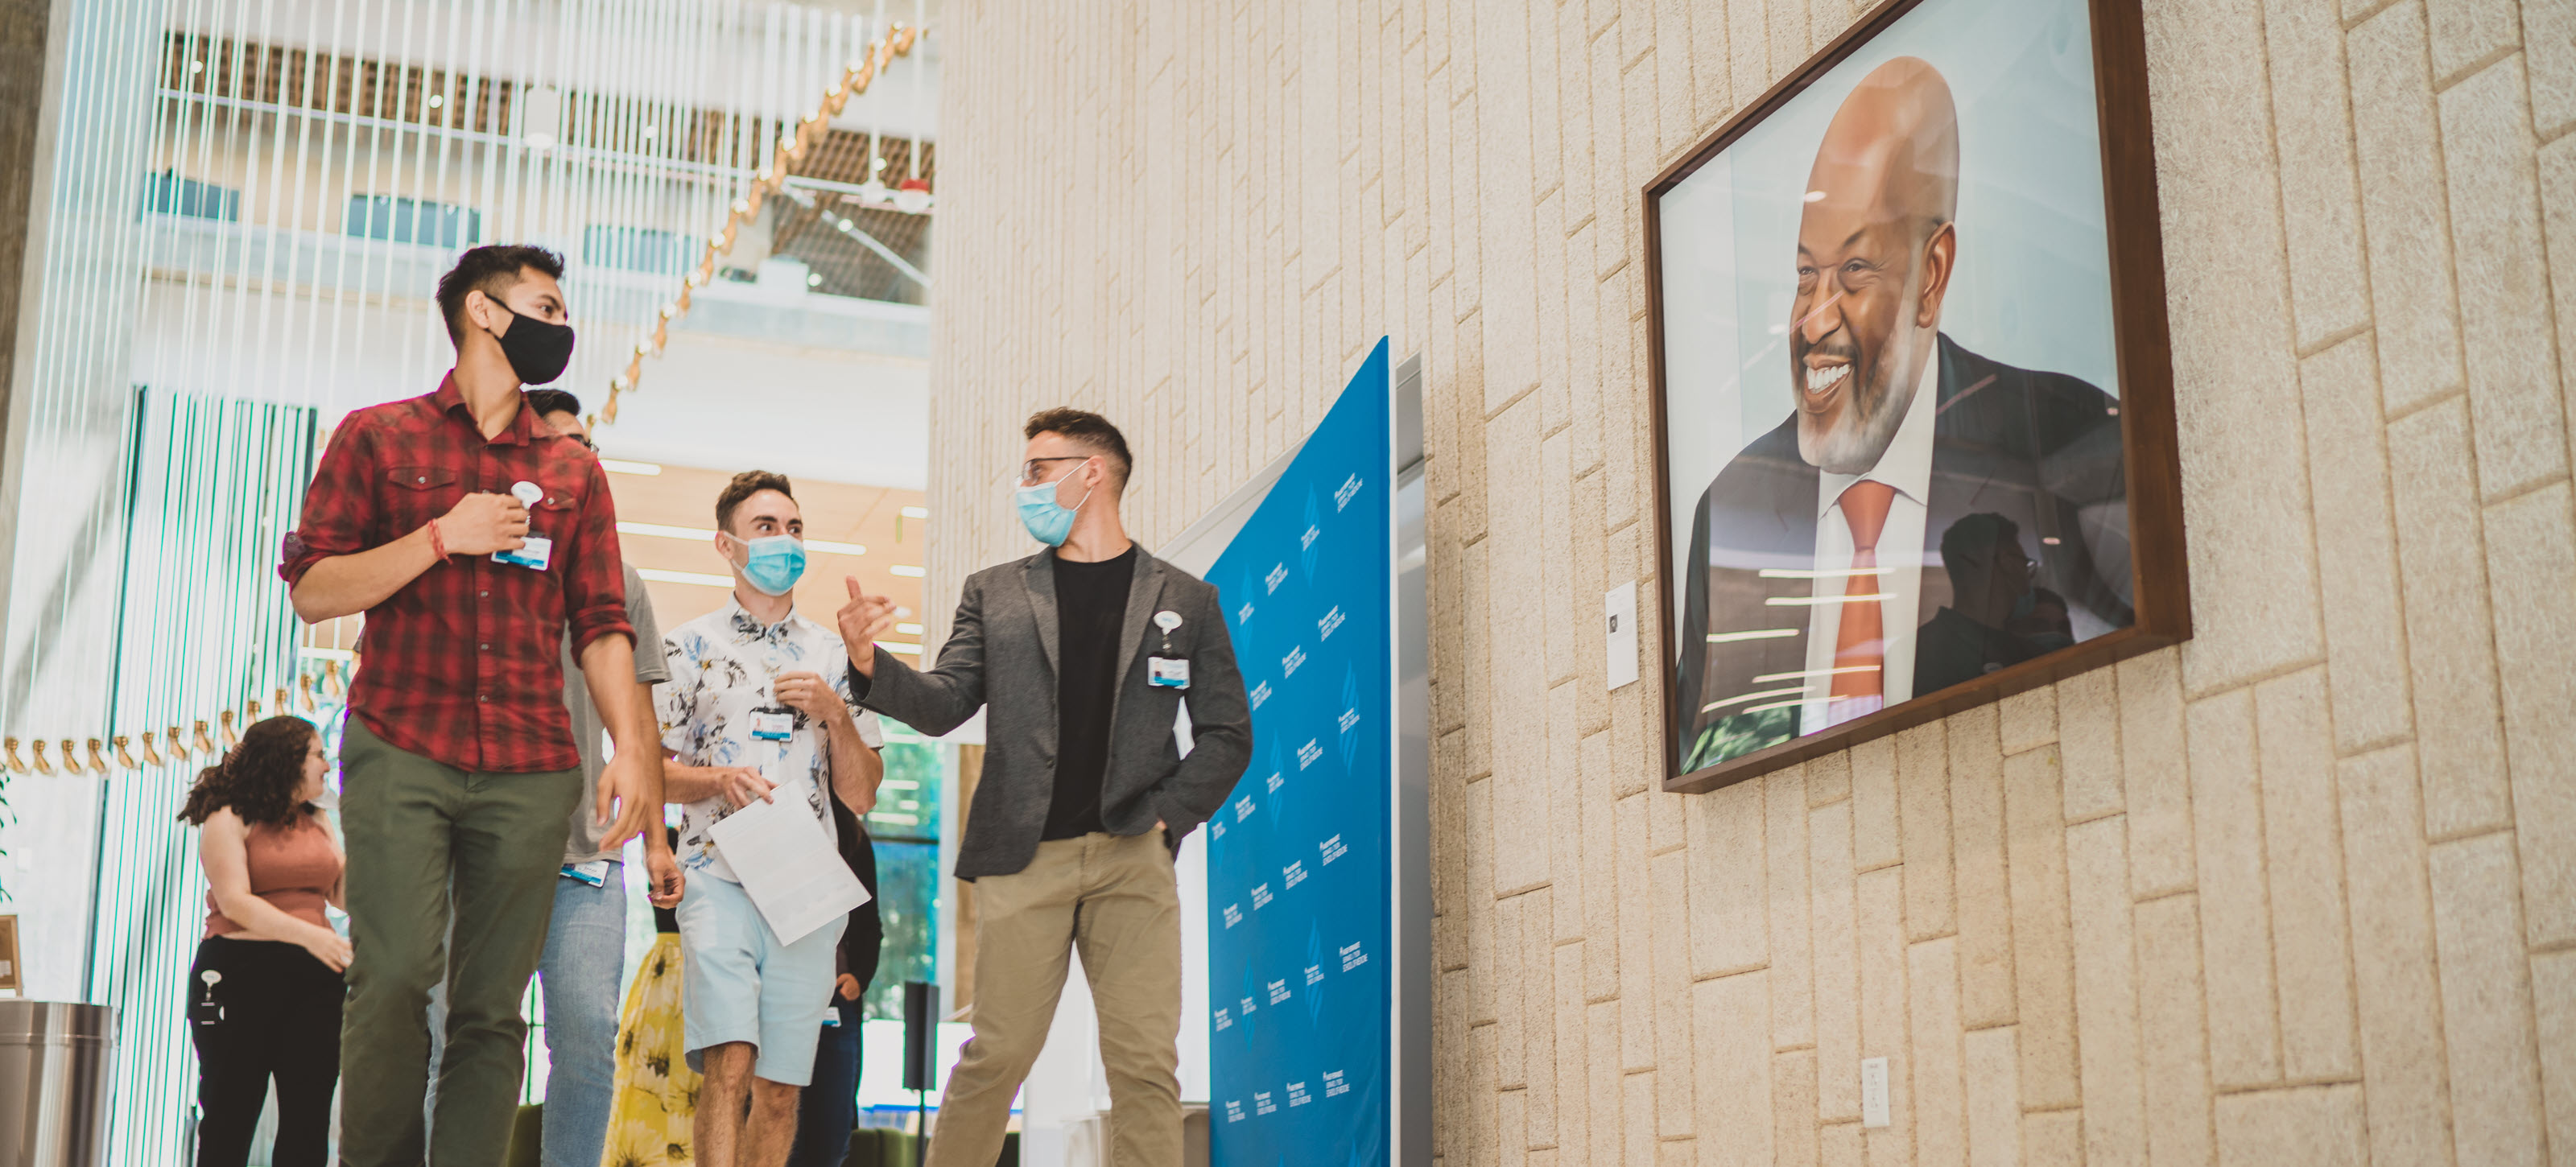 Medical students walk past the portrait of Bernard J. Tyson on the KPSOM campus.